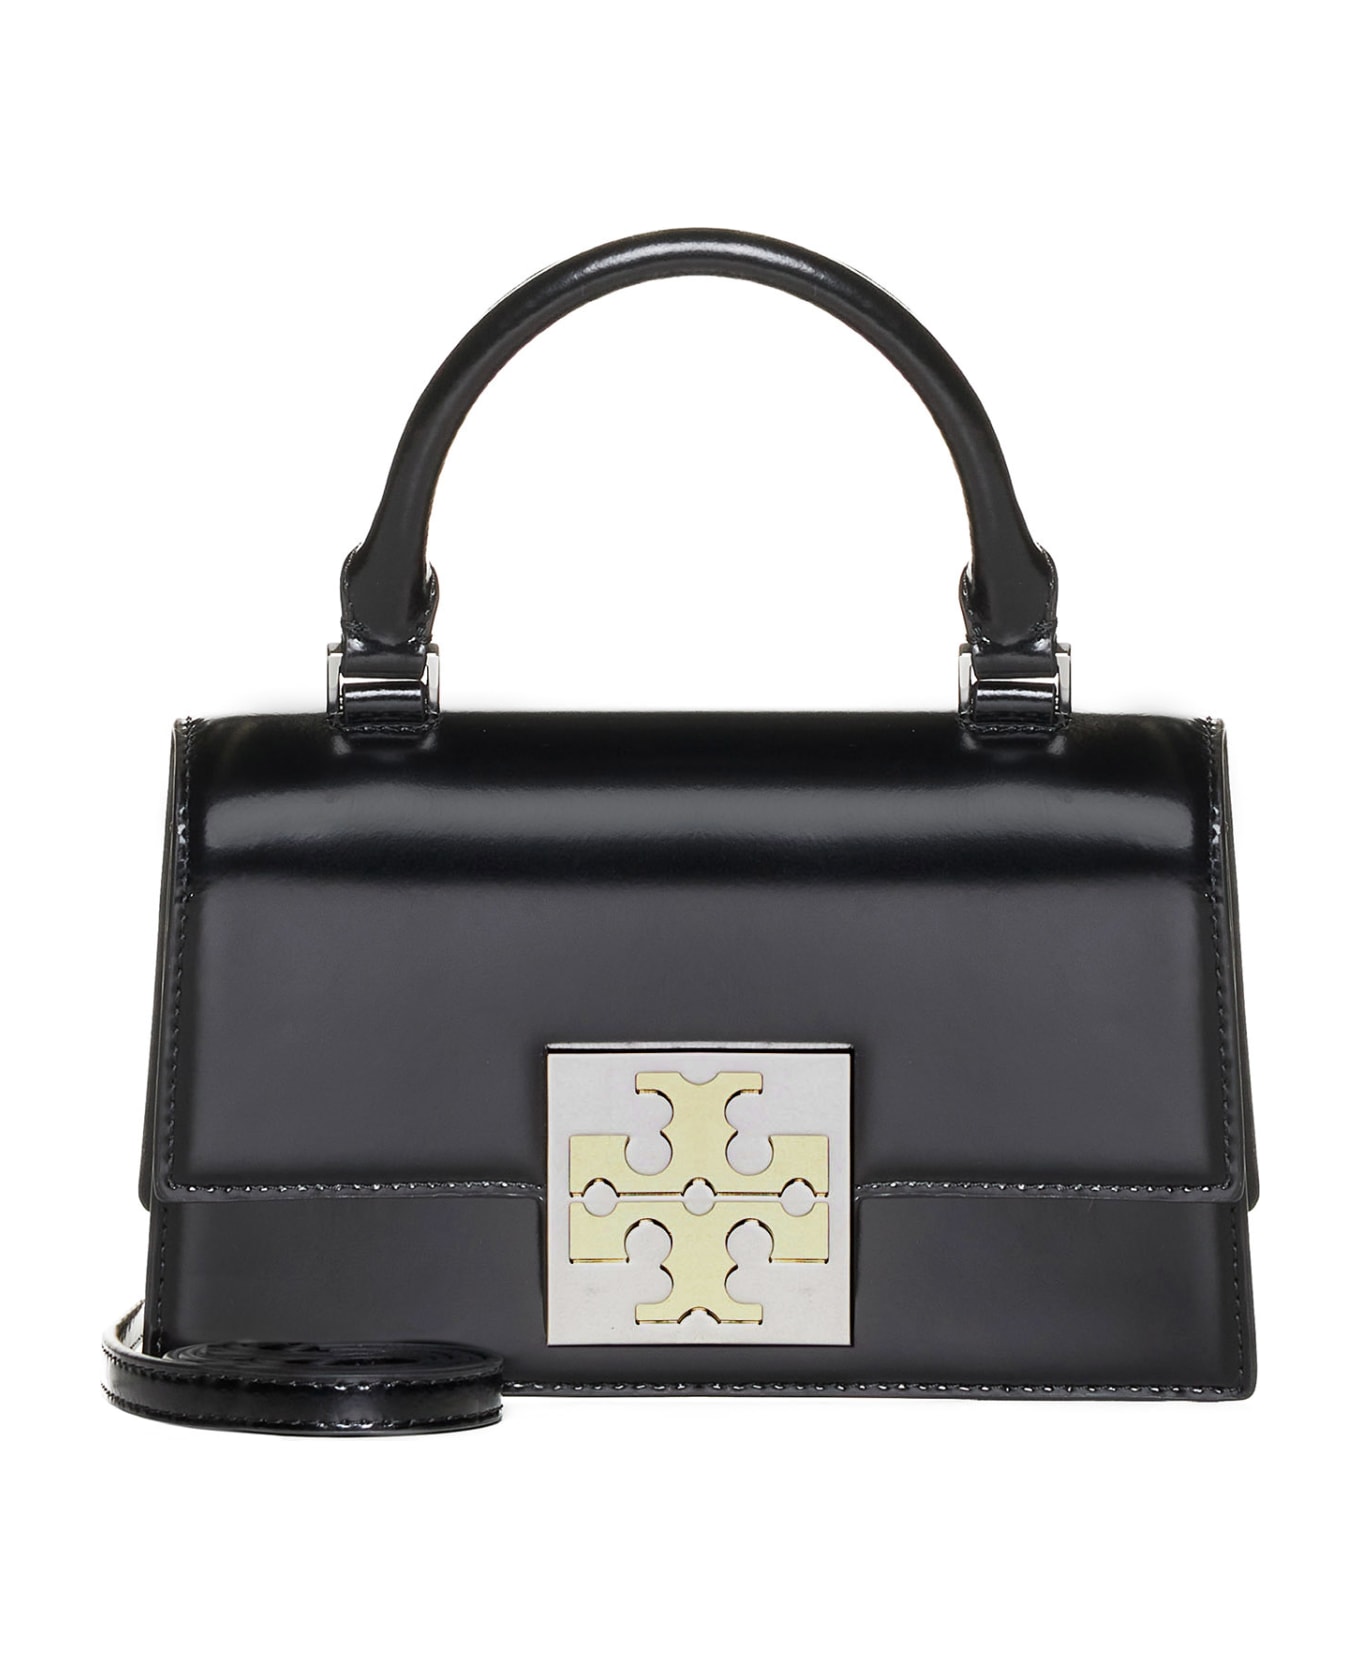 Tory Burch Leather Mini Handbag - Black